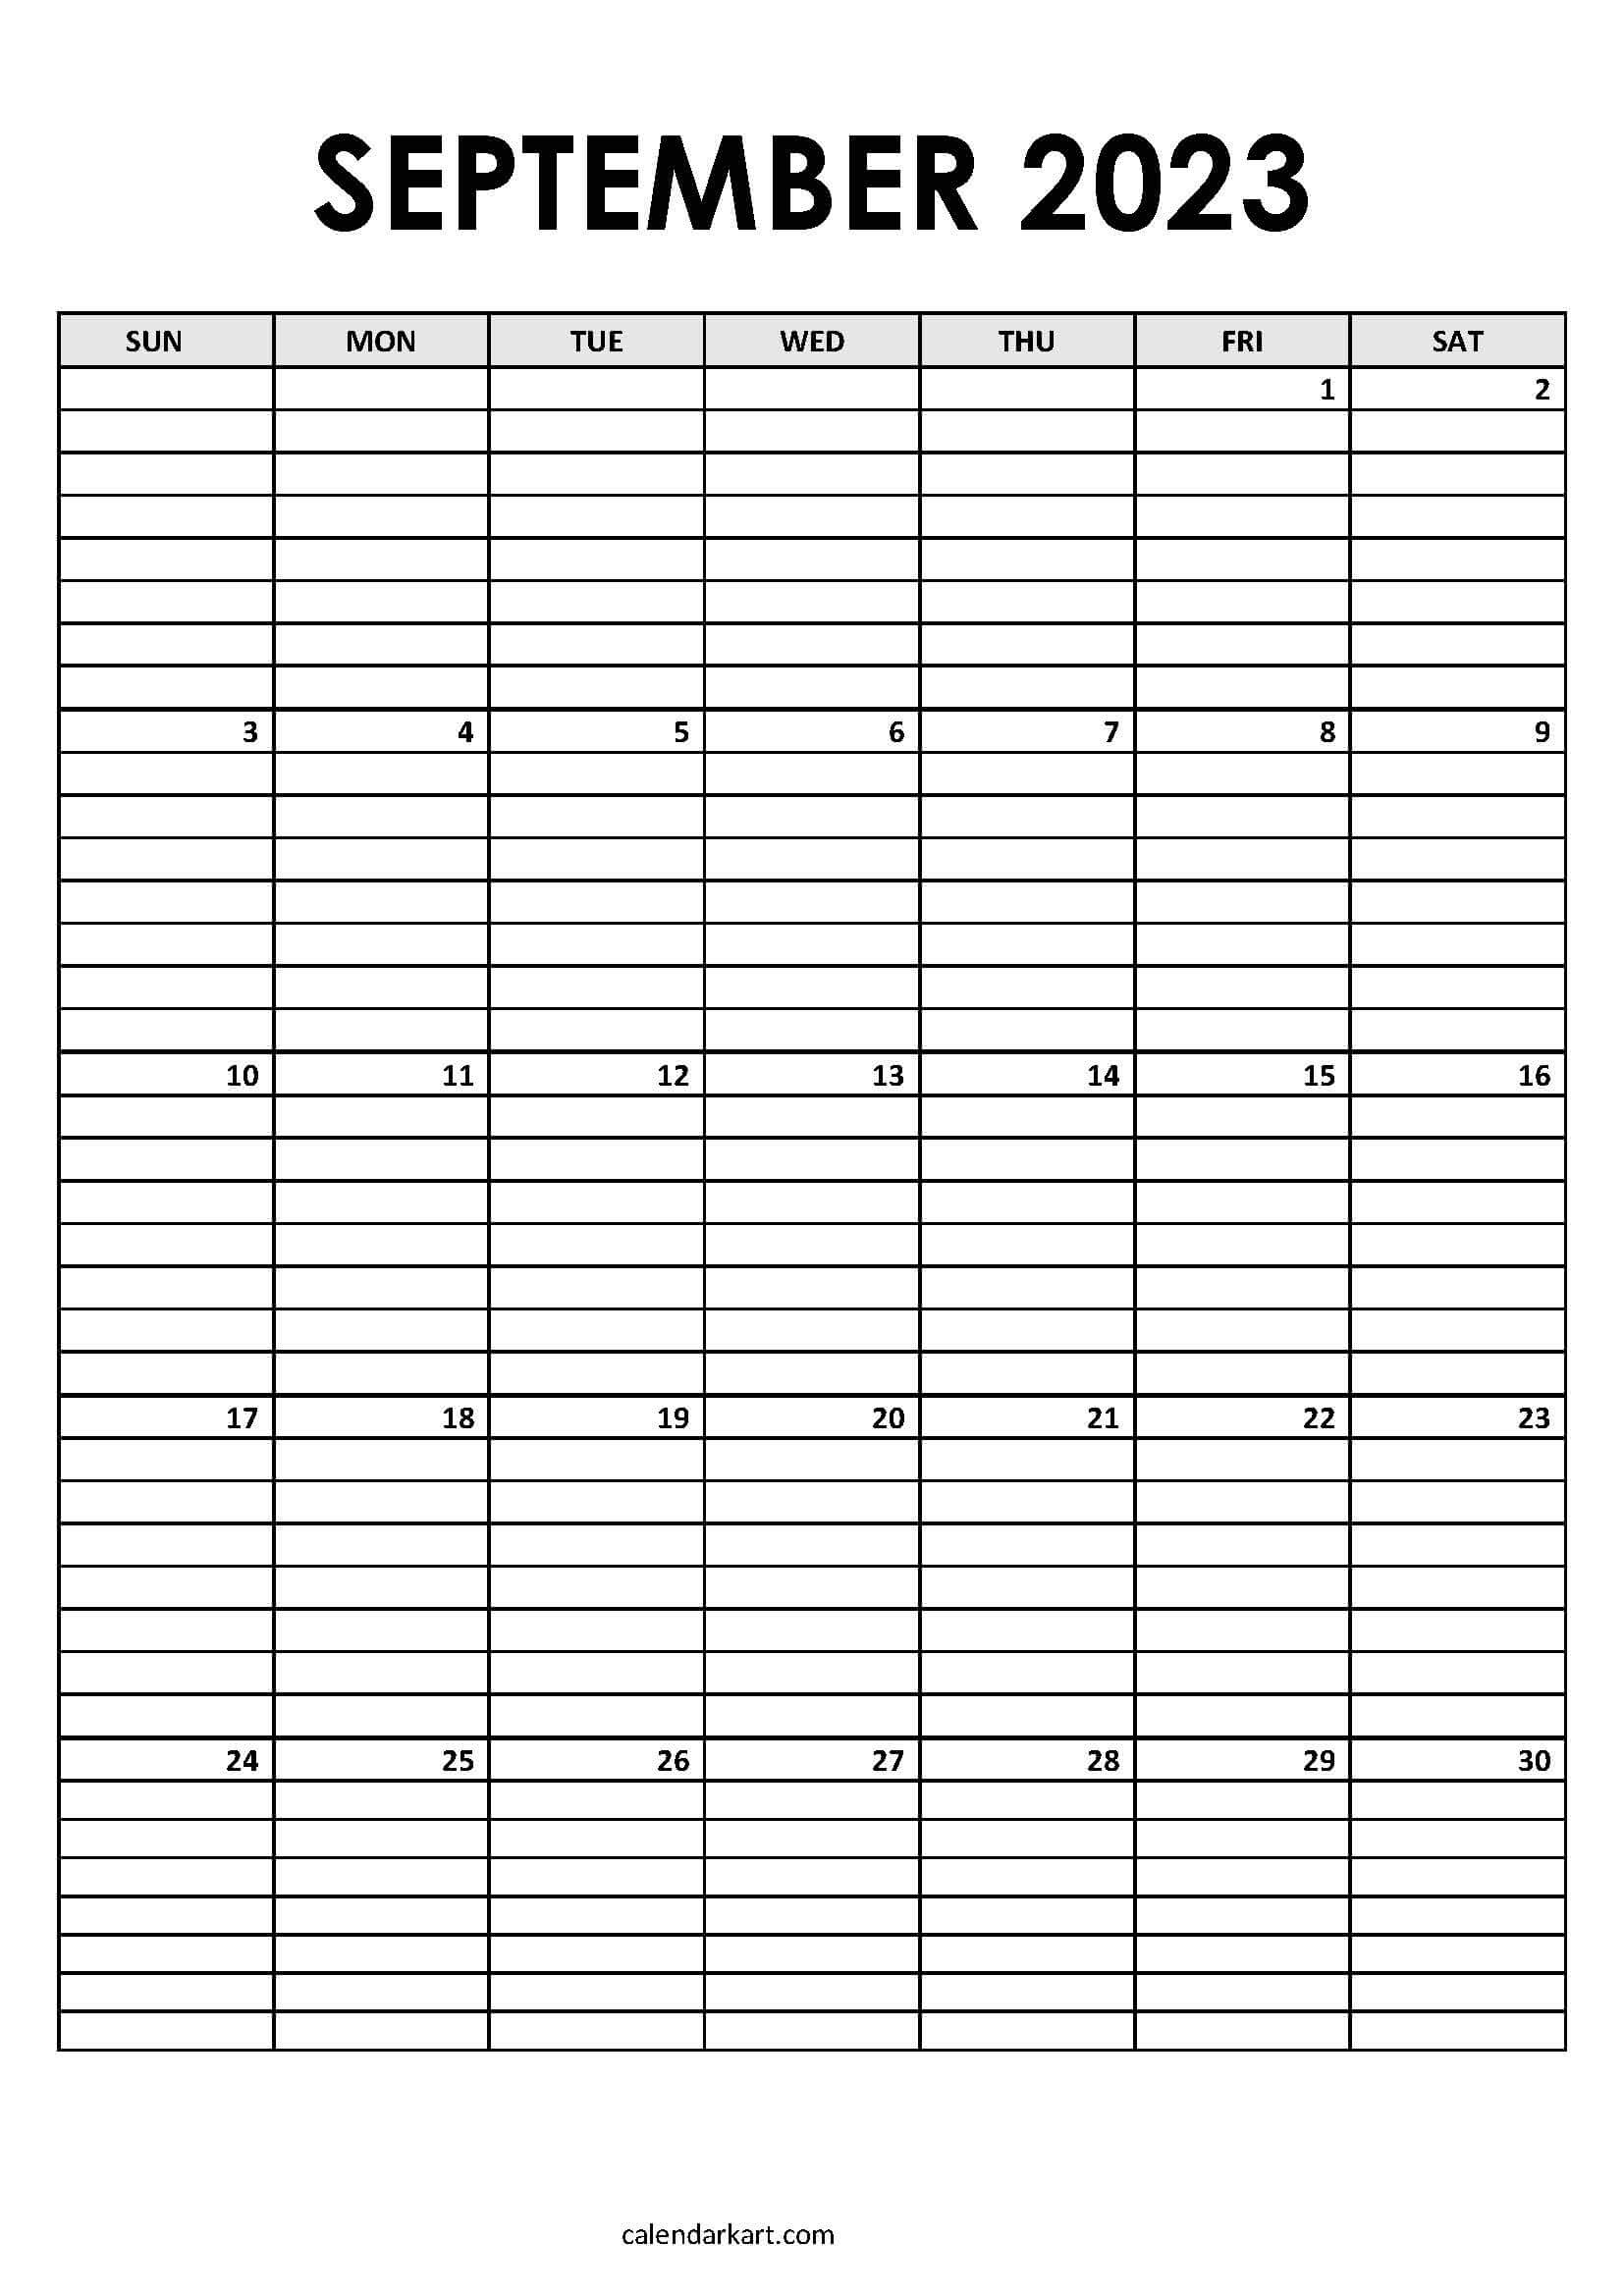 Free Printable September 2023 Calendars - Calendarkart intended for Free Printable Calendar 2024 With Grid Lines